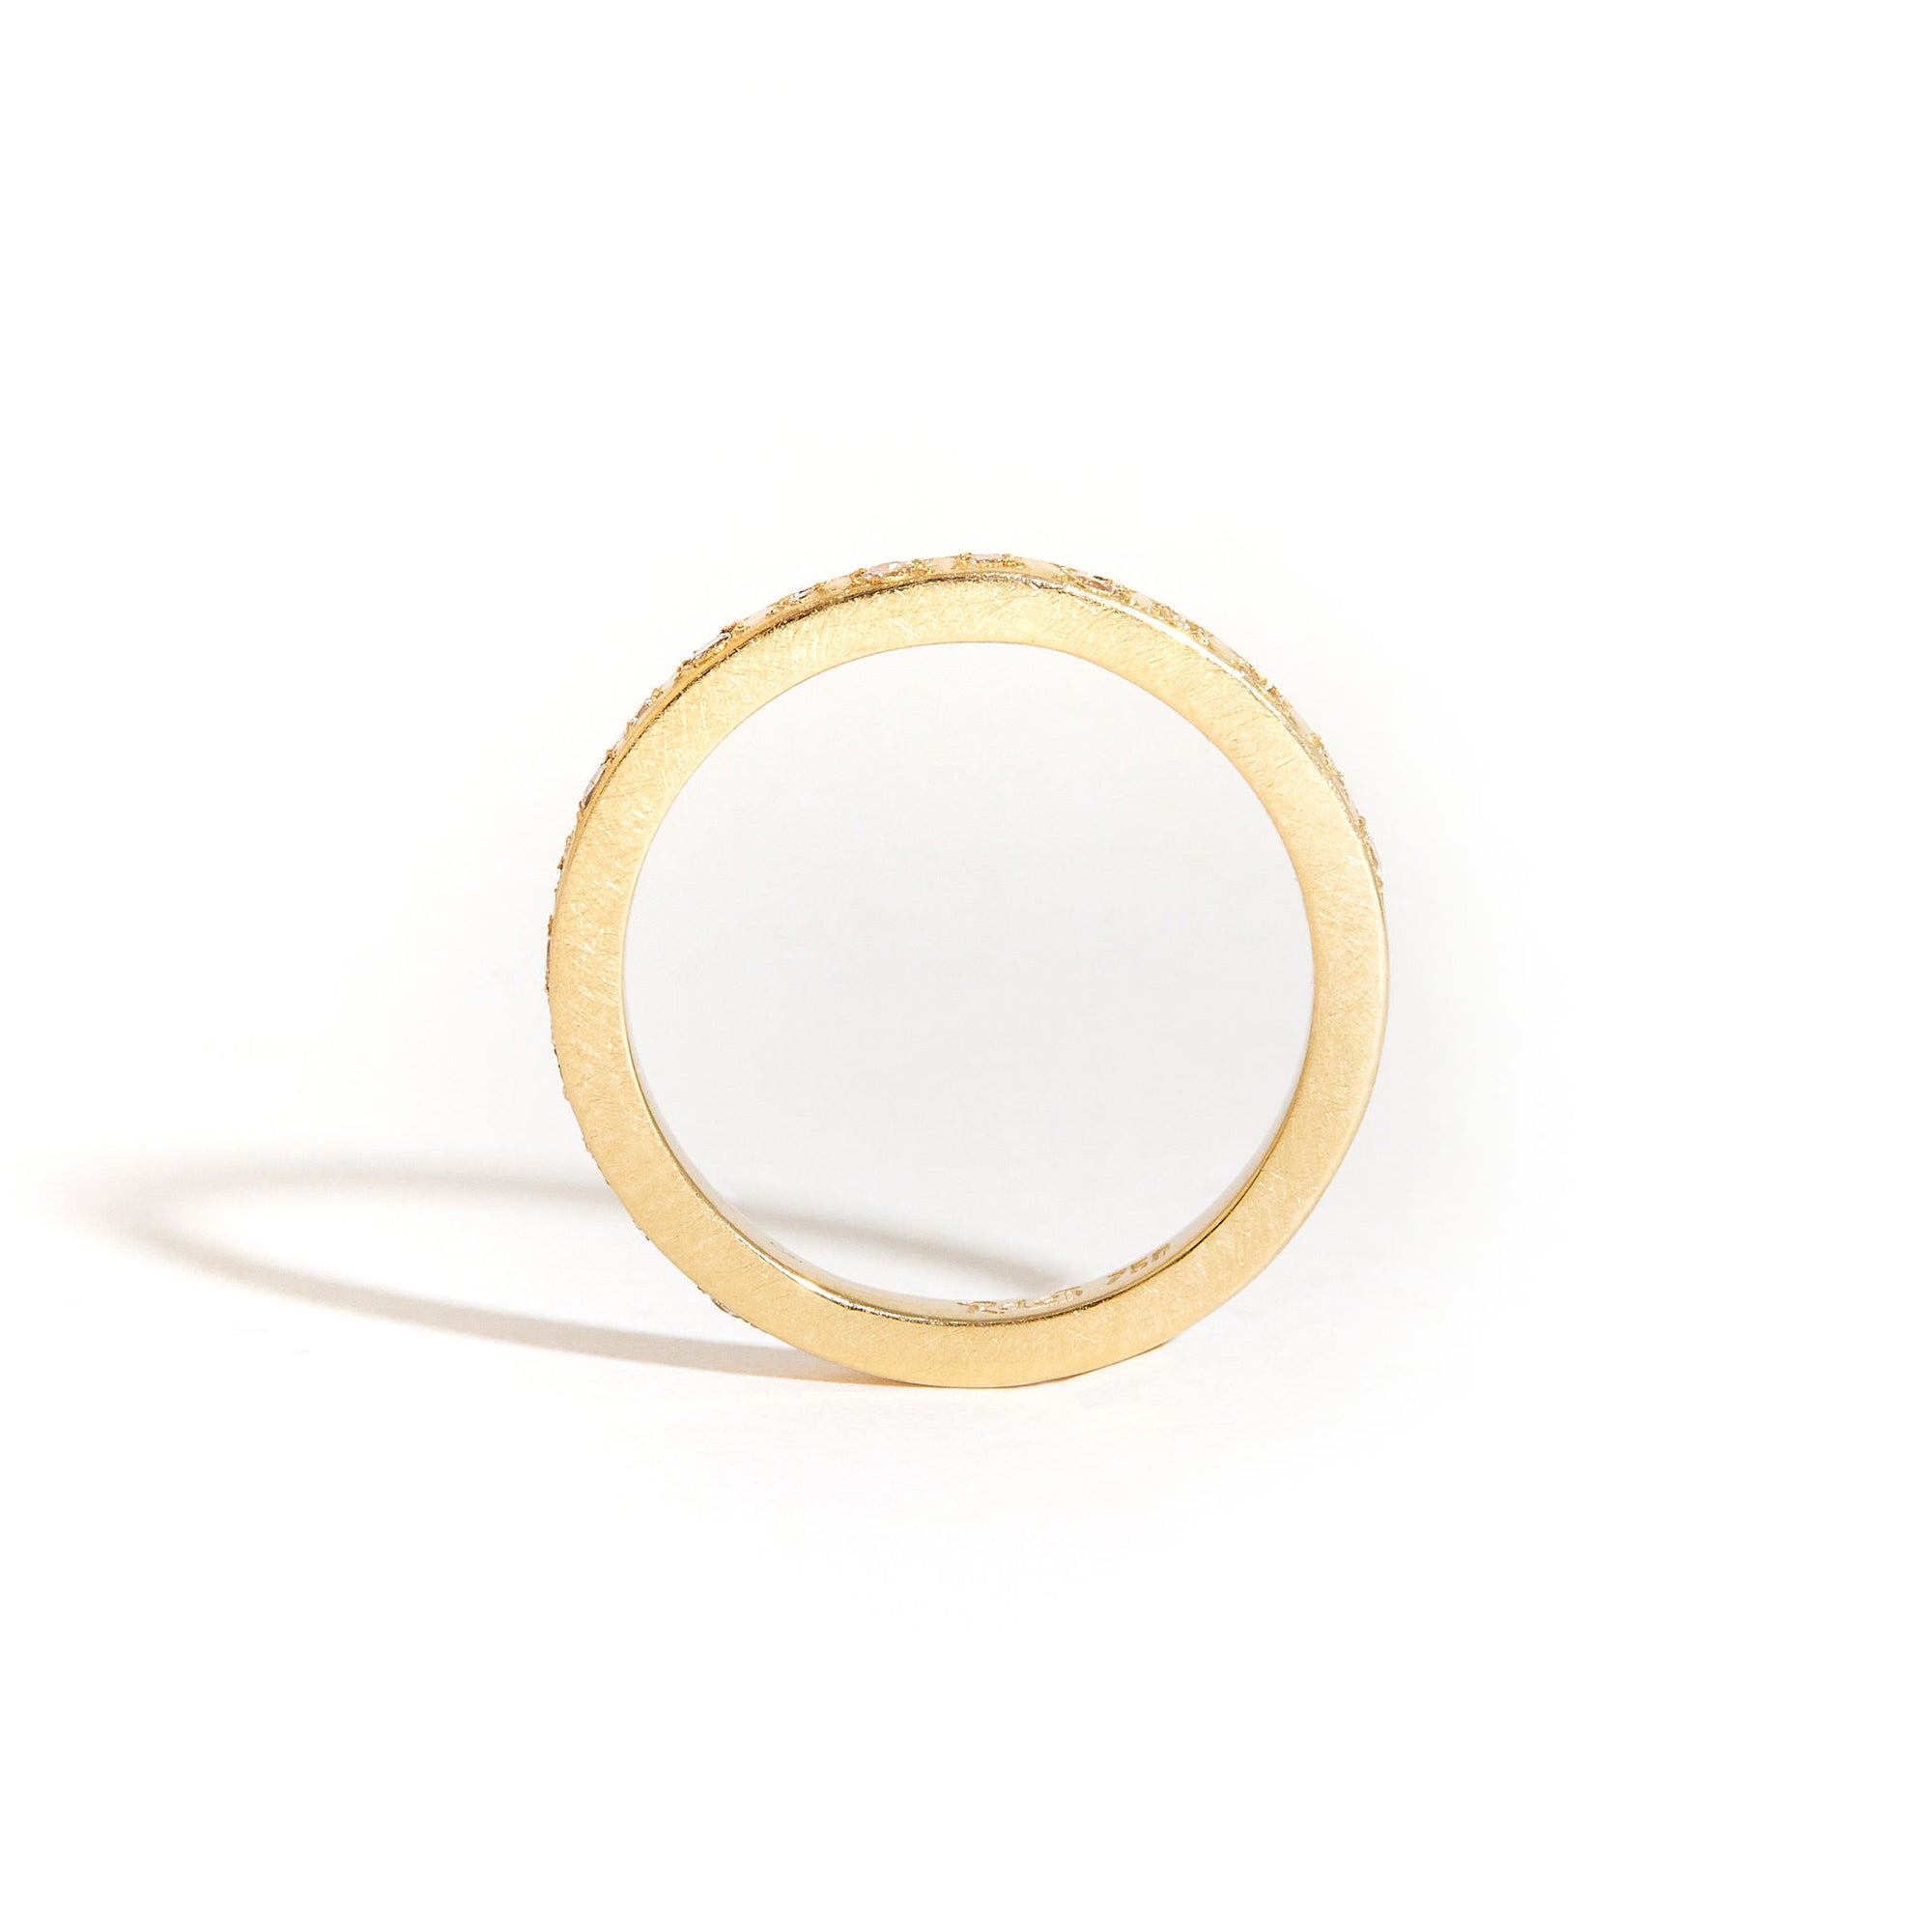 Twilight Wedding Band | Handmade Diamond Wedding Ring in 18ct Gold